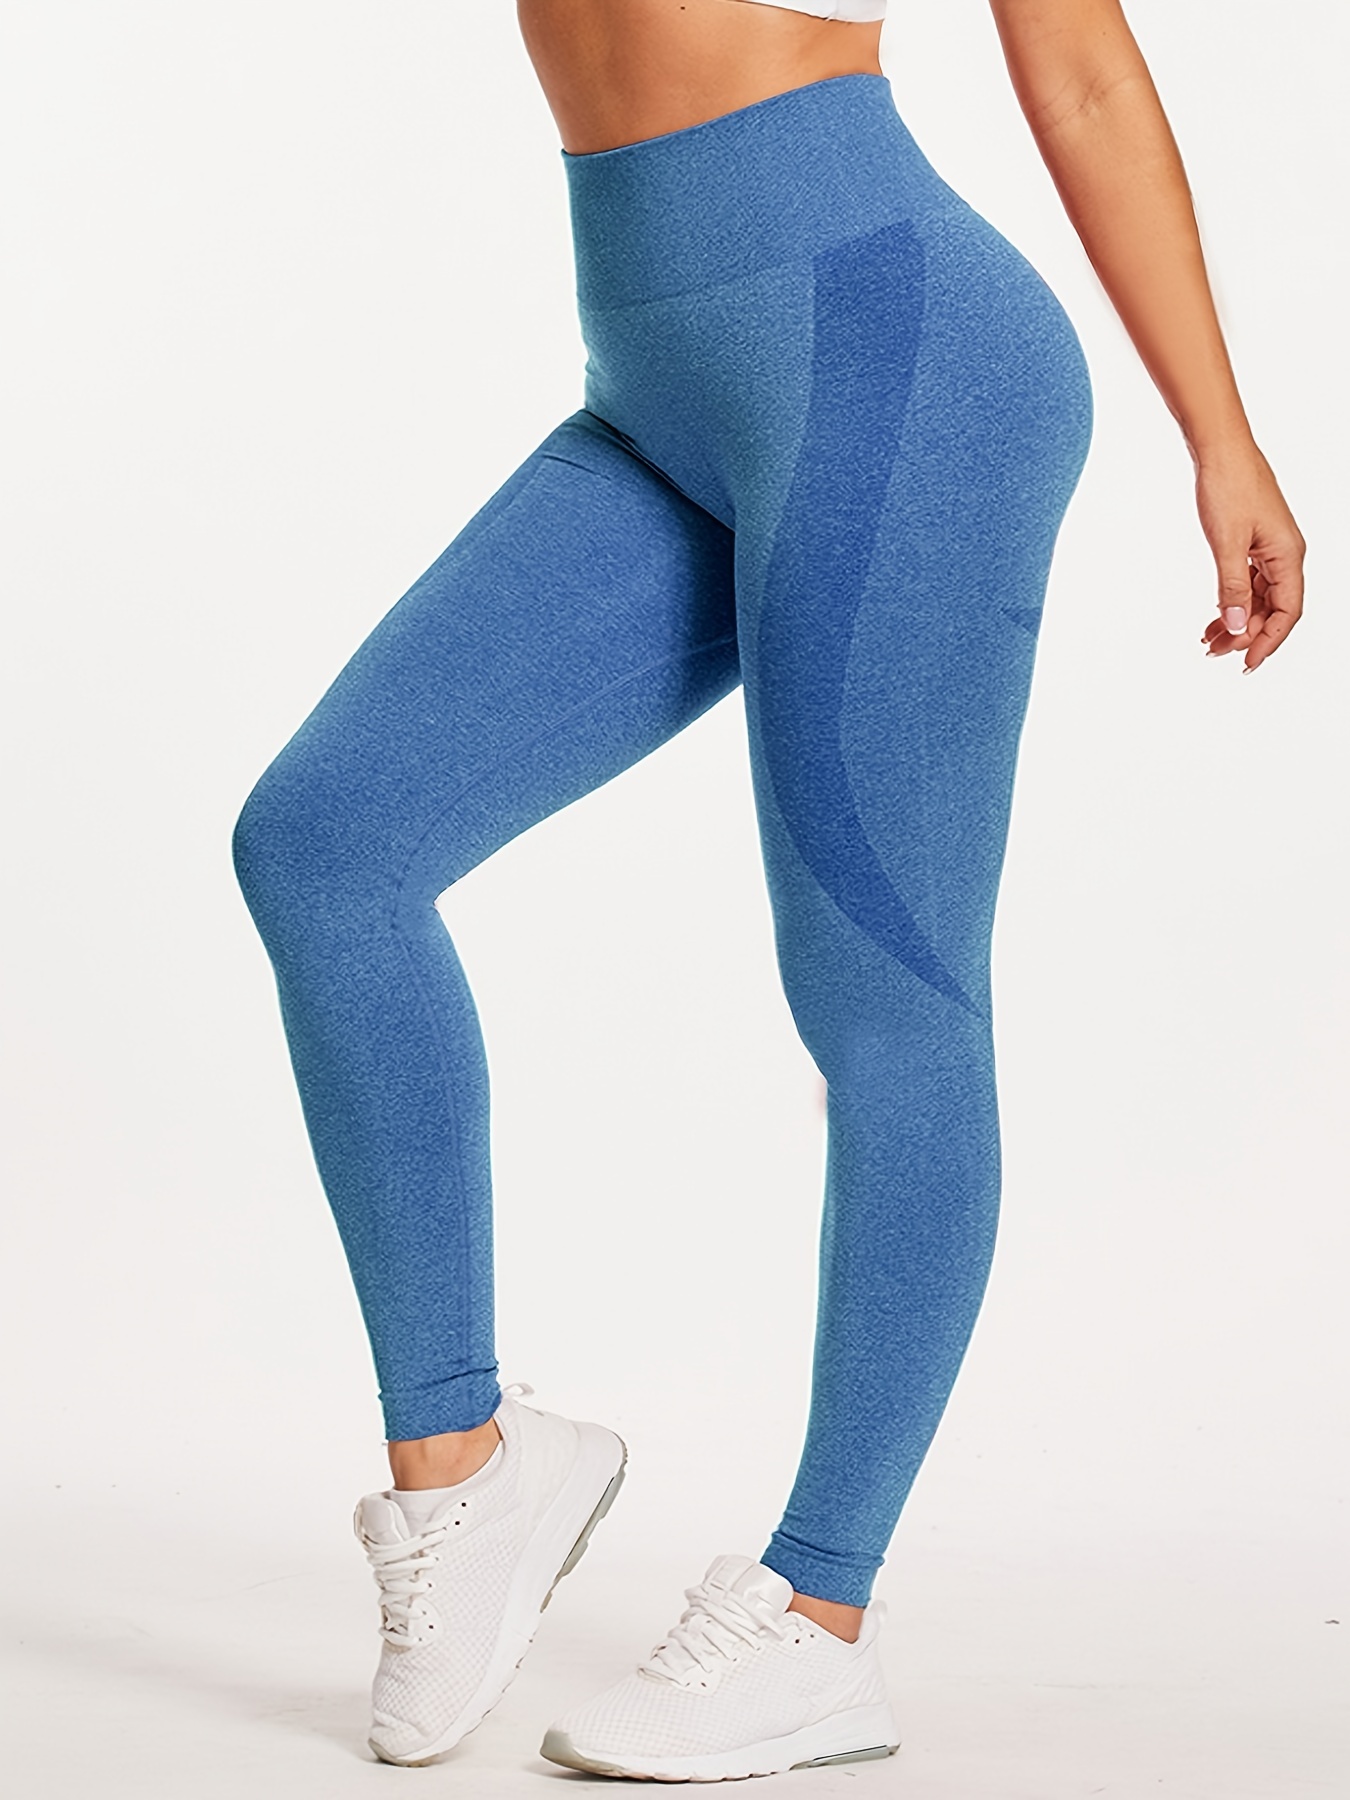 High Waisted Pastel Midnight Blue Leggings Yoga Pants for Women